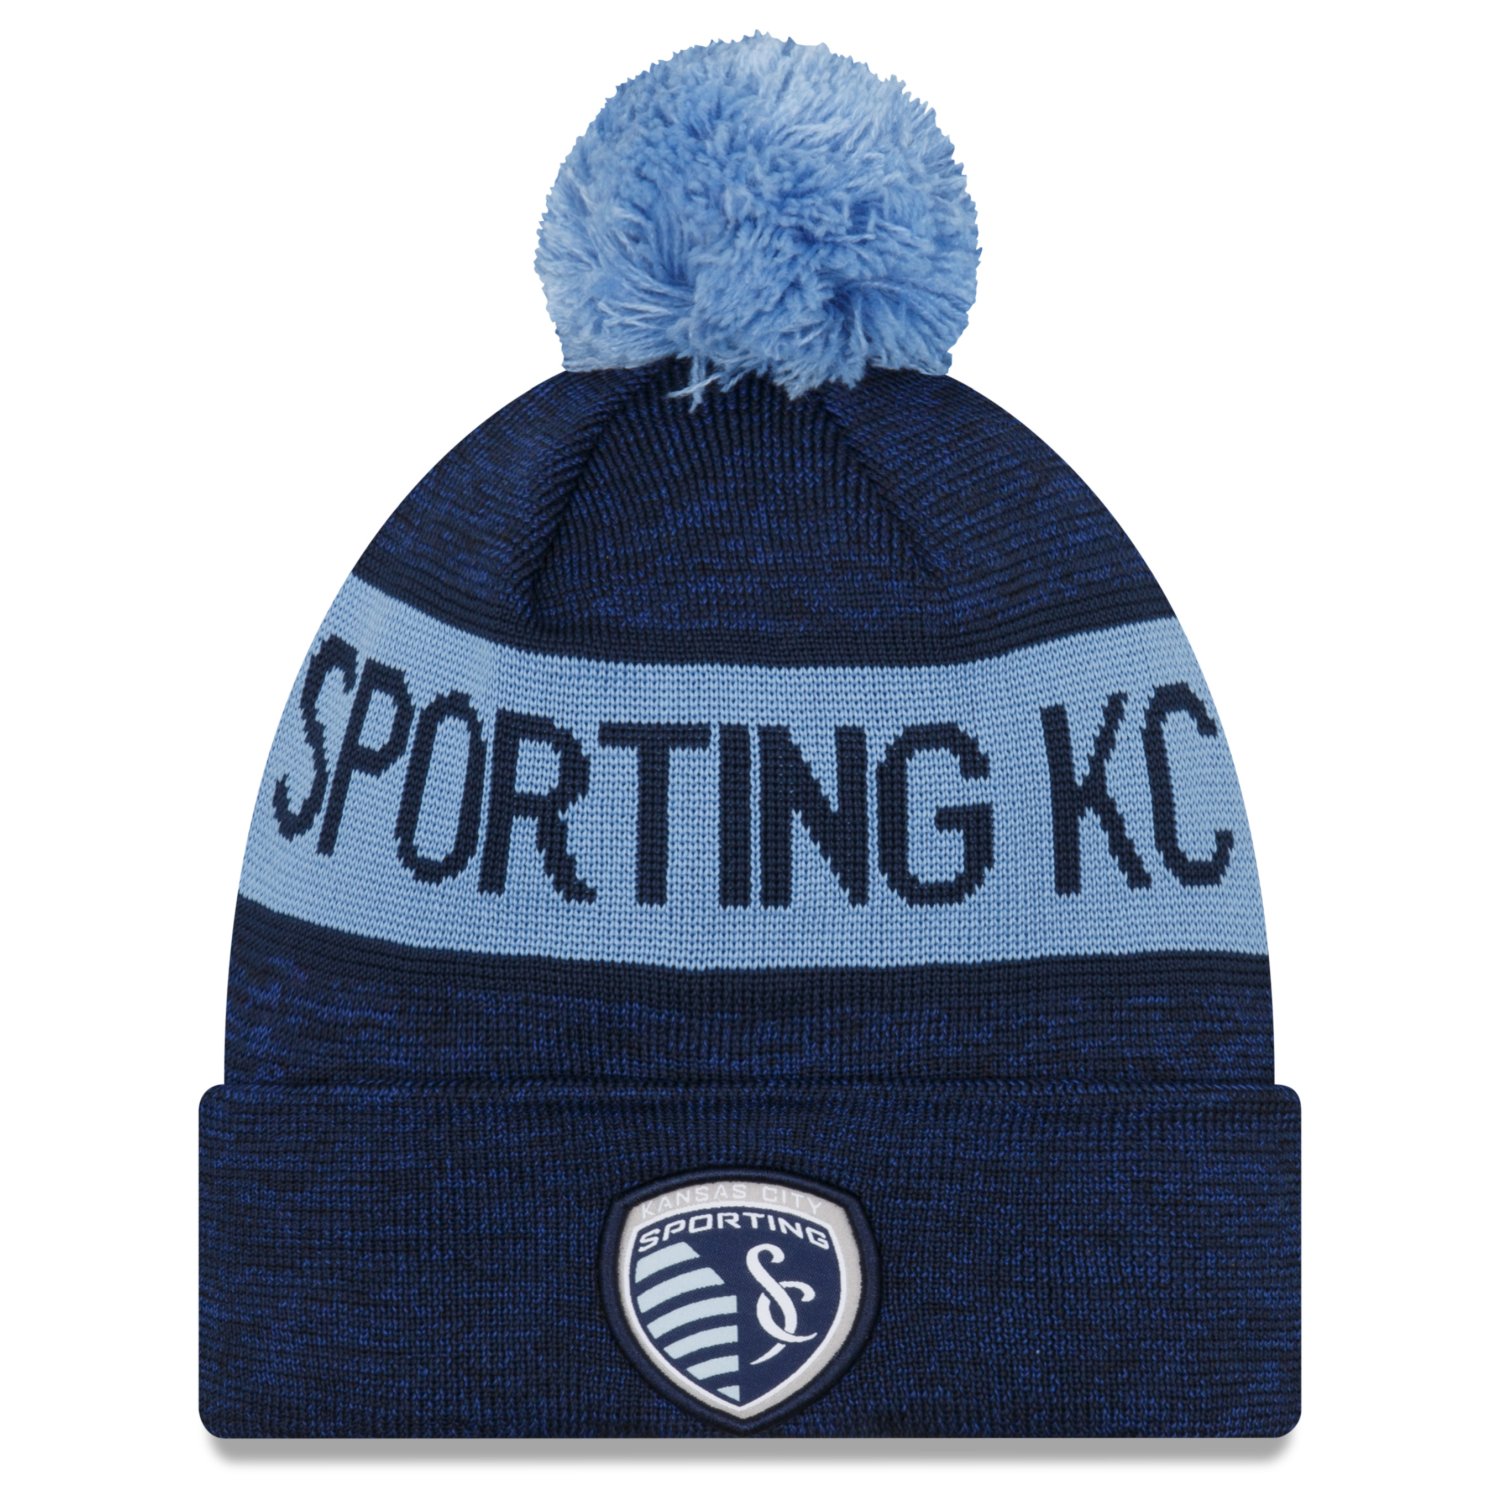 New Era Winter Mütze - MLS KICK OFF Sporting Kansas City | Herren ...